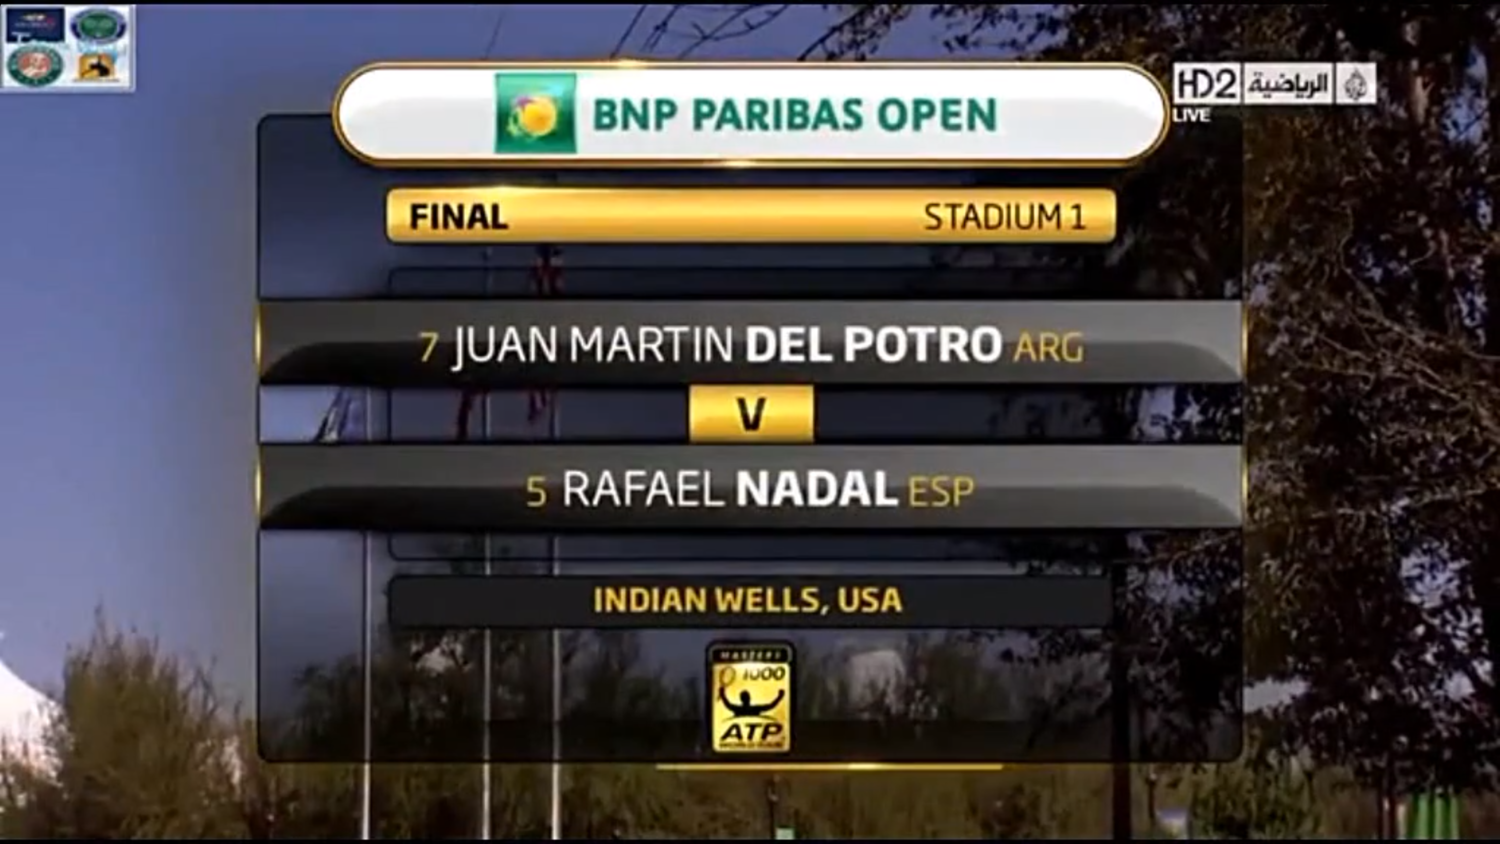 BNP Paribas Open 2013. Финал. Хуан Мартин дель Потро - Рафаэль Надаль